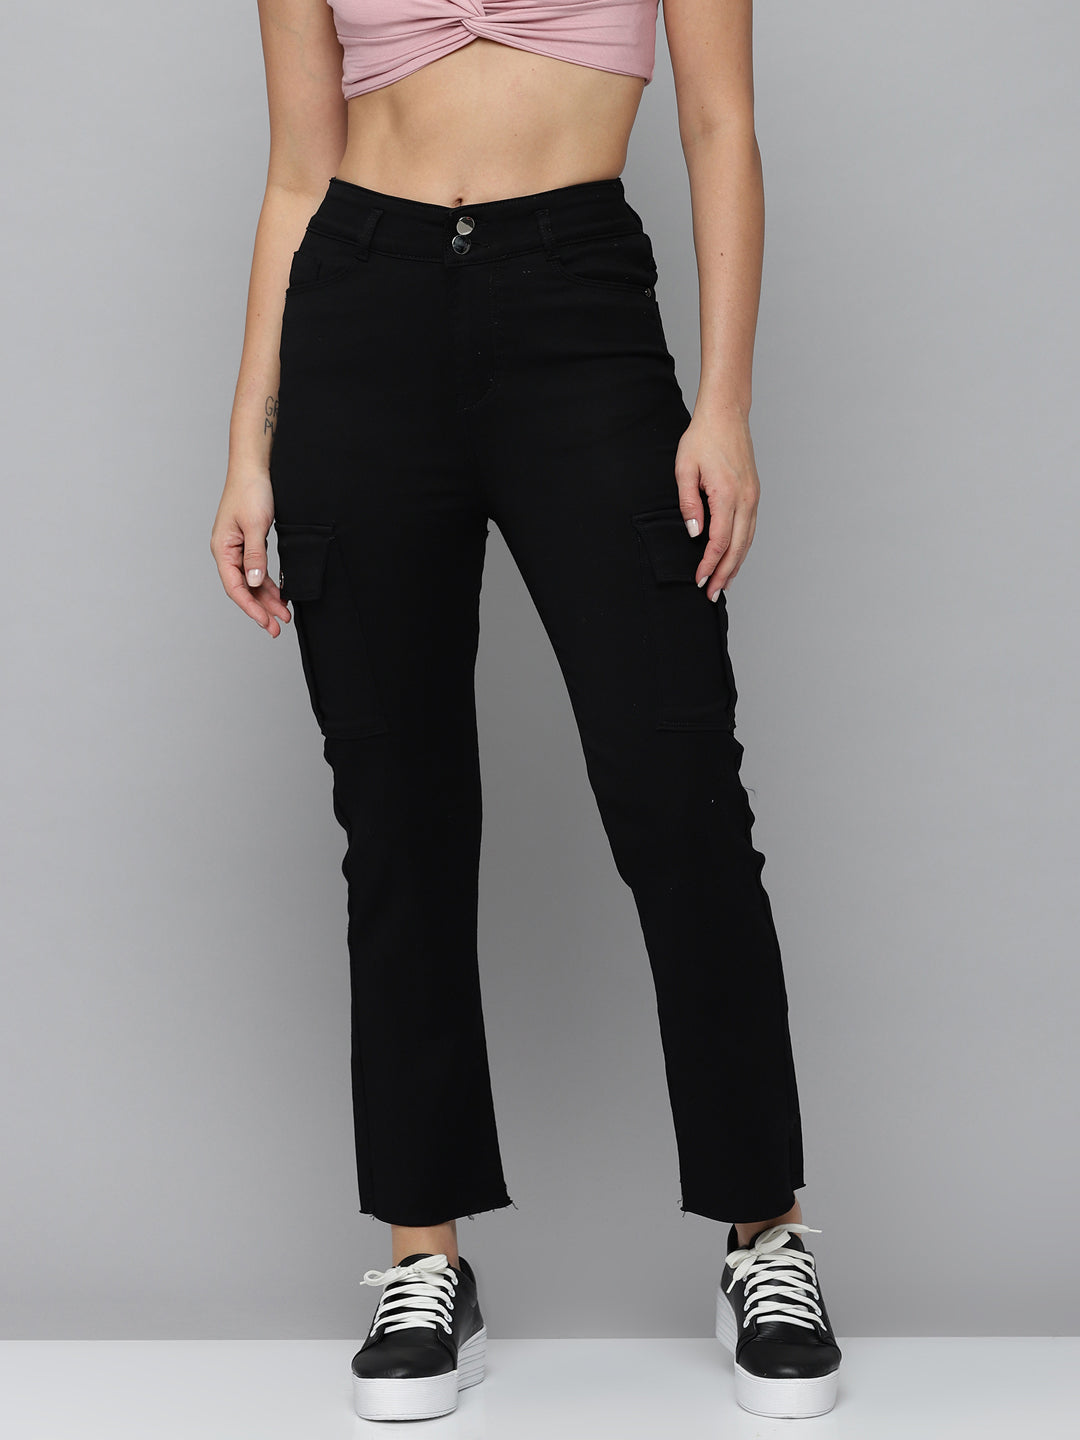 Women's Black Solid Straight Fit Denim Jeans